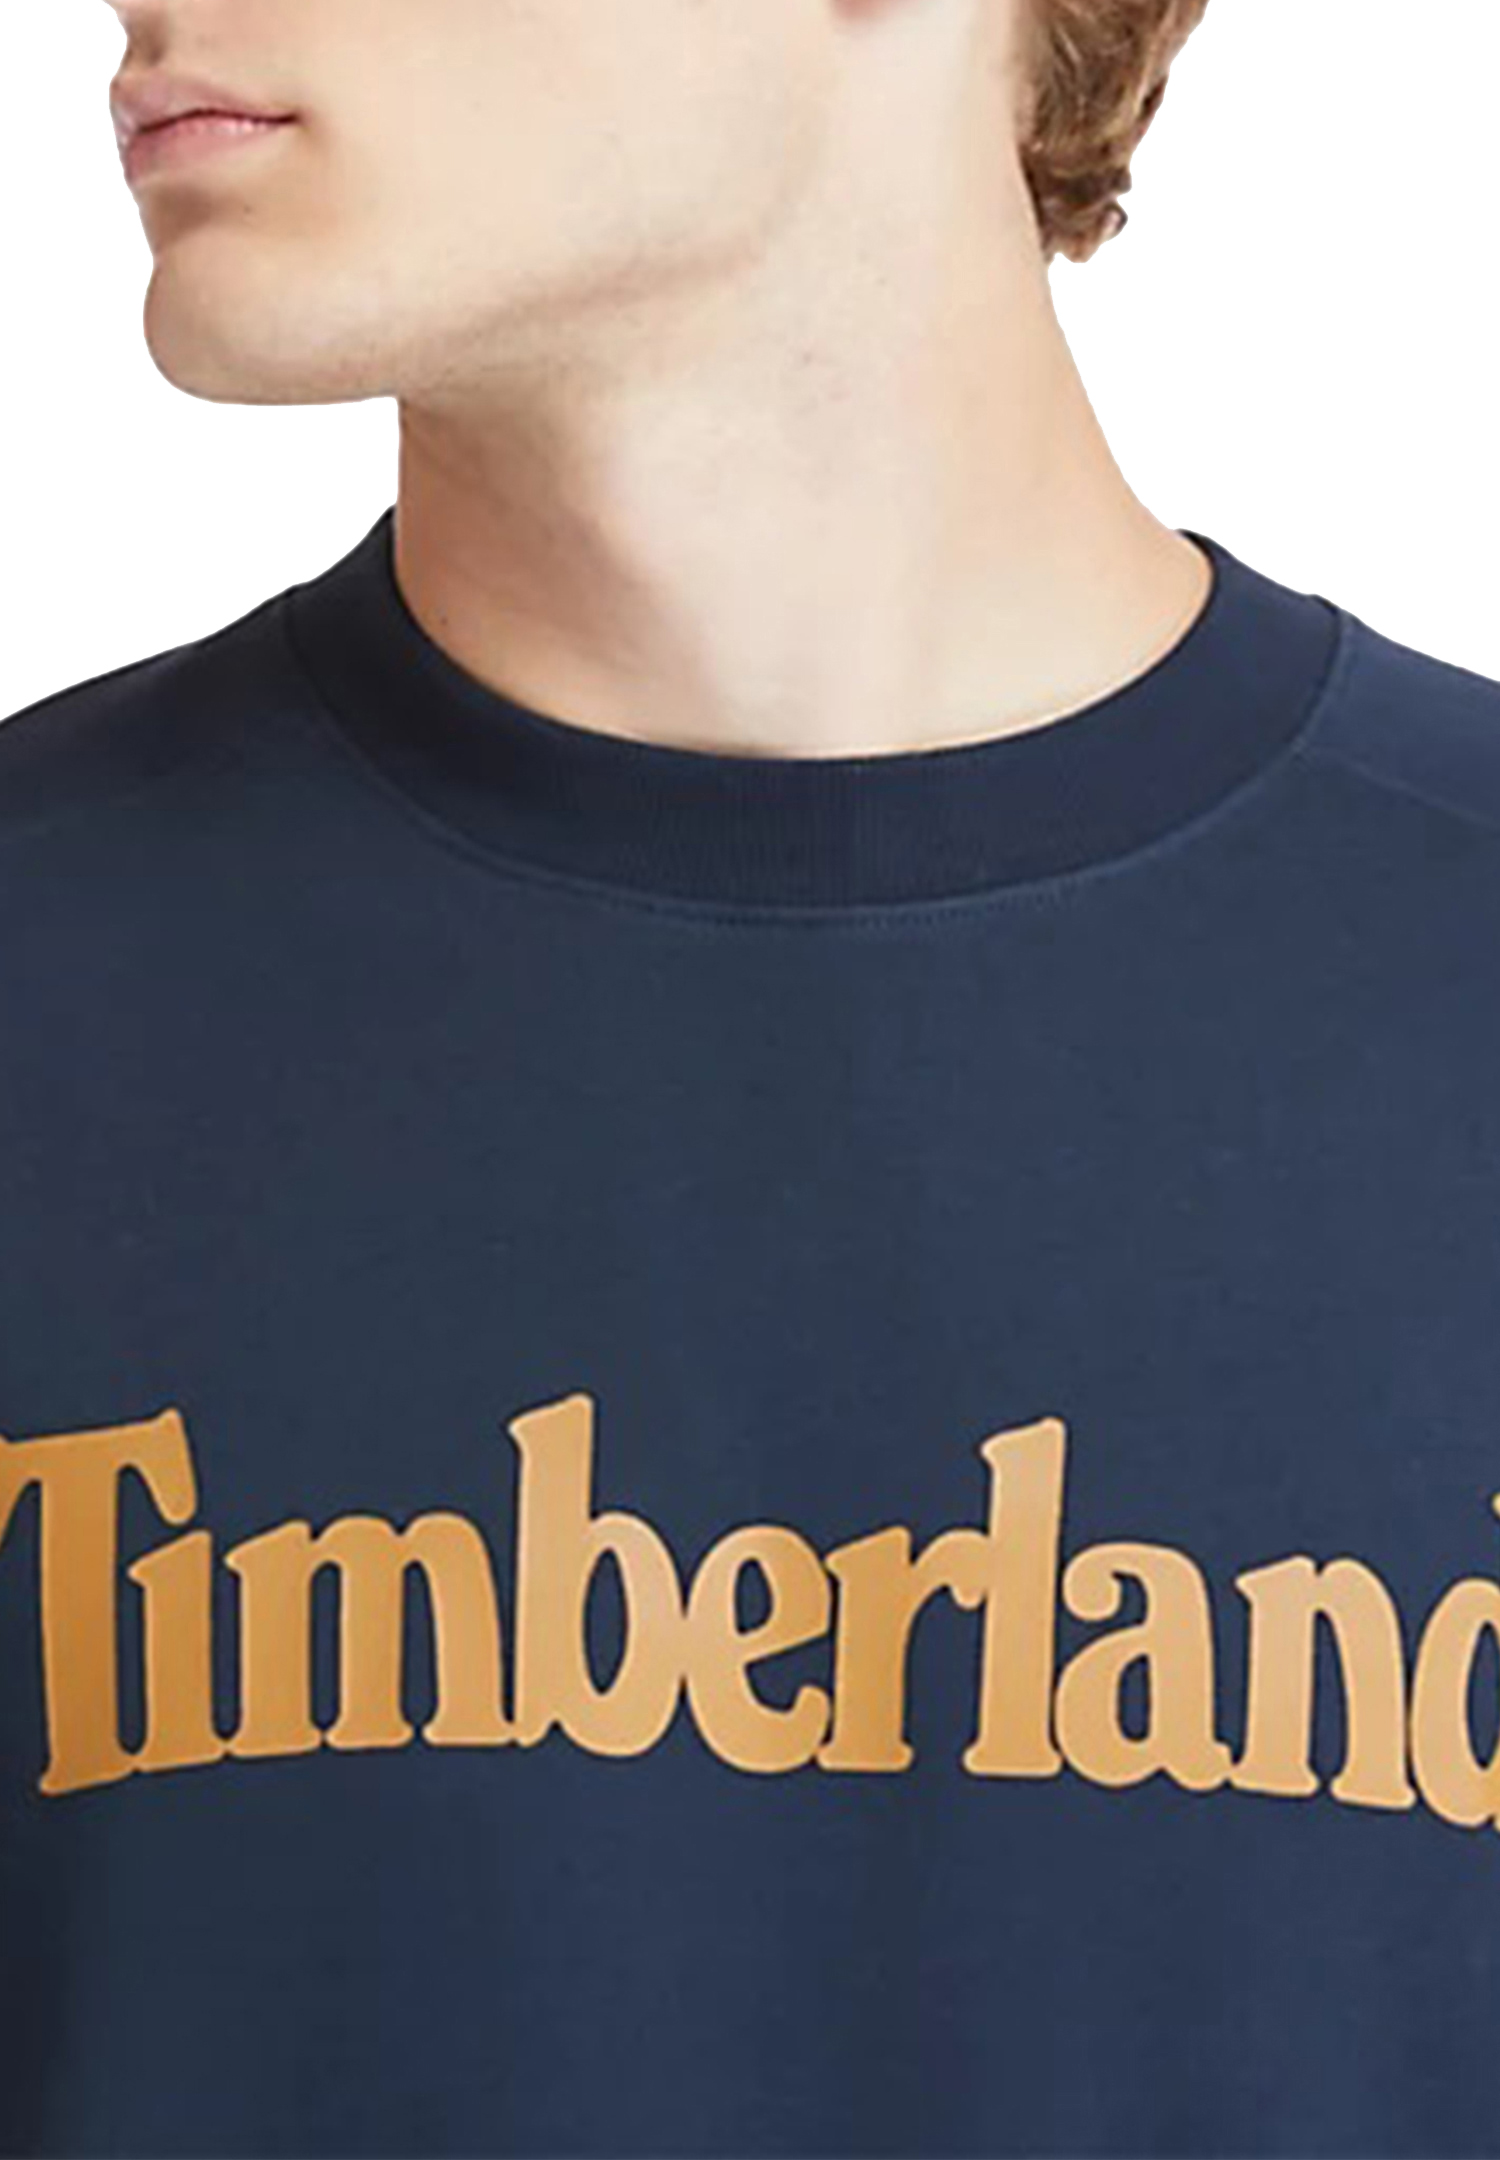 Timberland OYSTER R BB CREW SWEAT Herren Sweatshirt Pullover TB0A2C6H blau